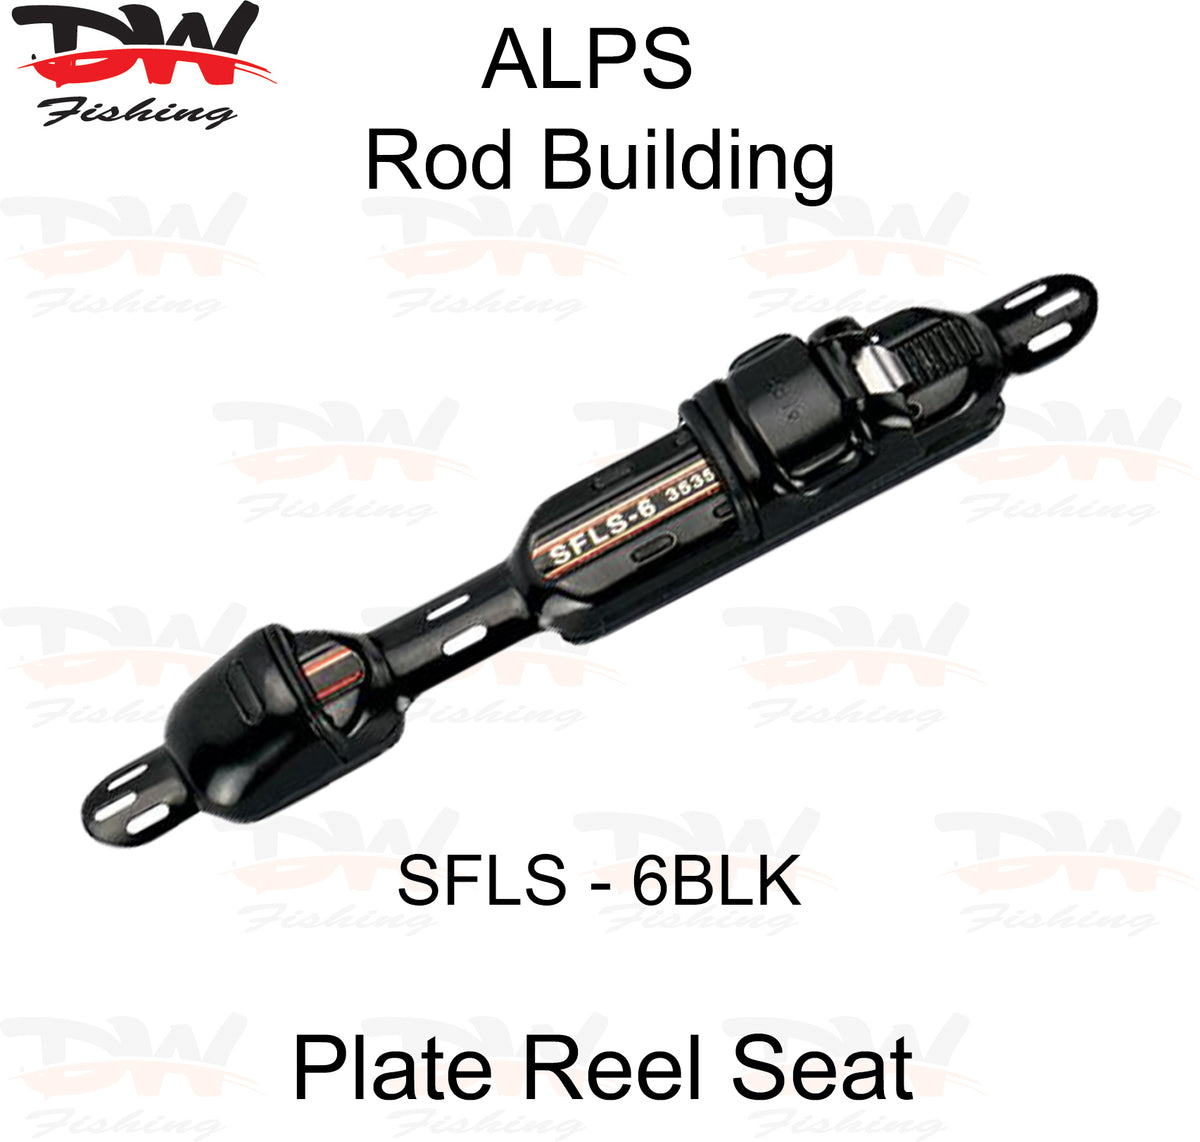 ALPS Slide Lock Plate Reel Seat | Rod Building | Dave's Tackle Bag